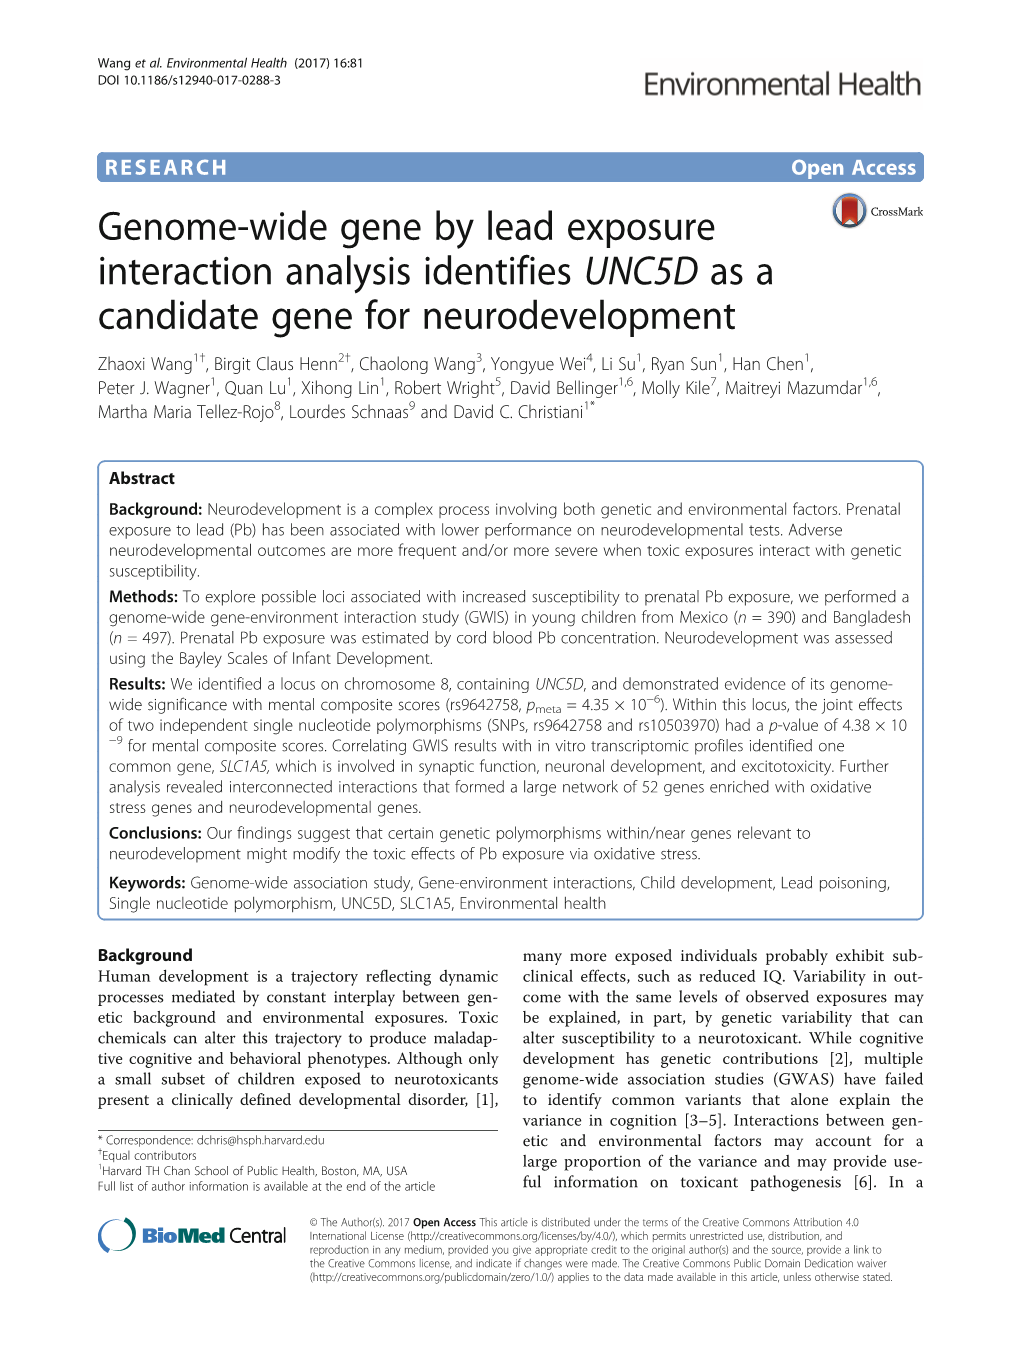 Genome-Wide Gene by Lead Exposure Interaction Analysis Identifies